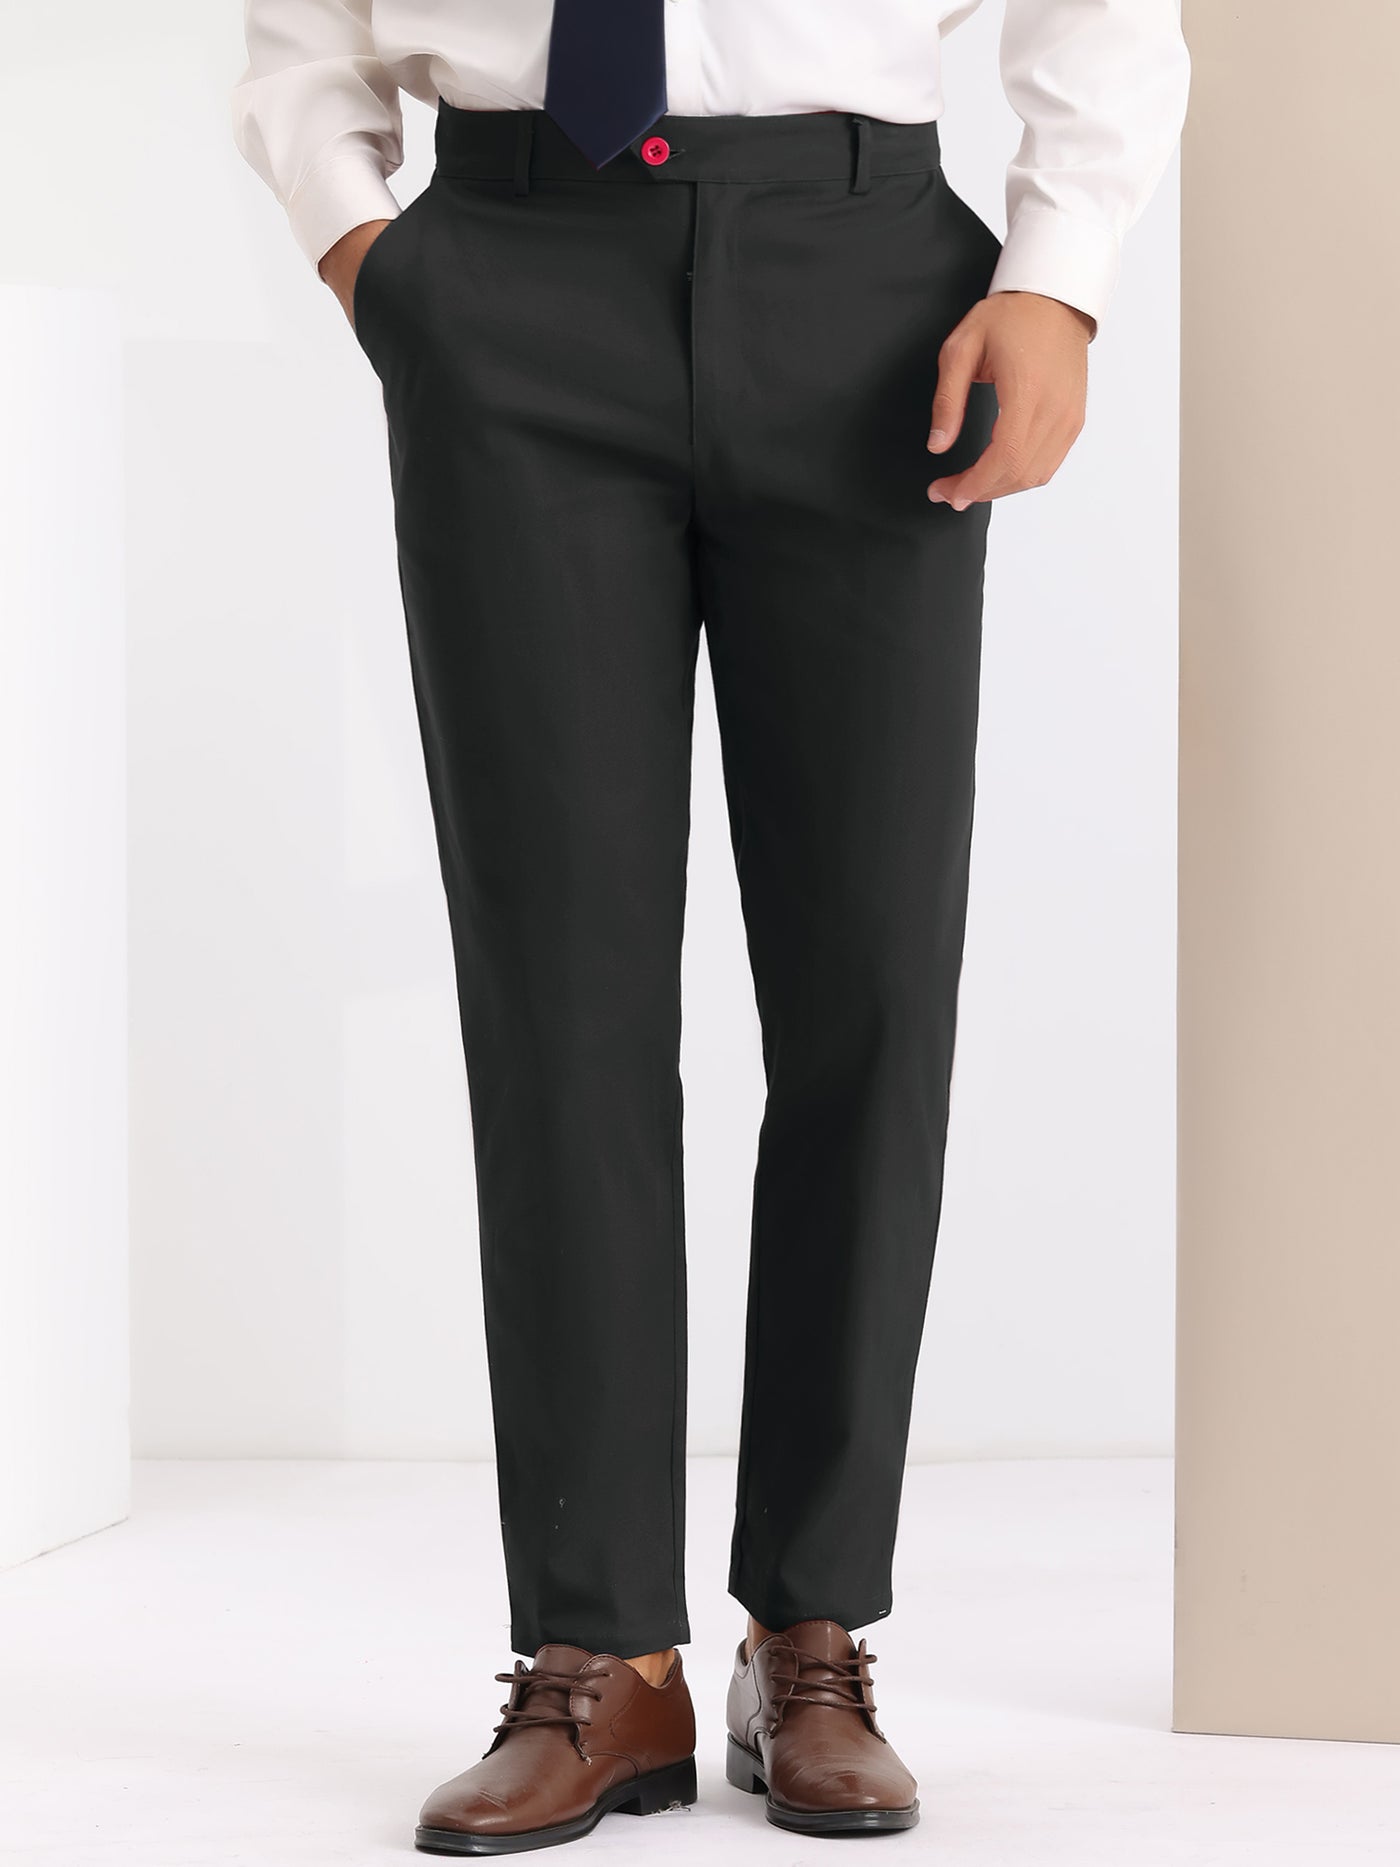 Bublédon Slim Fit Dress Pants Flat Front Stretch Solid Office Trouser